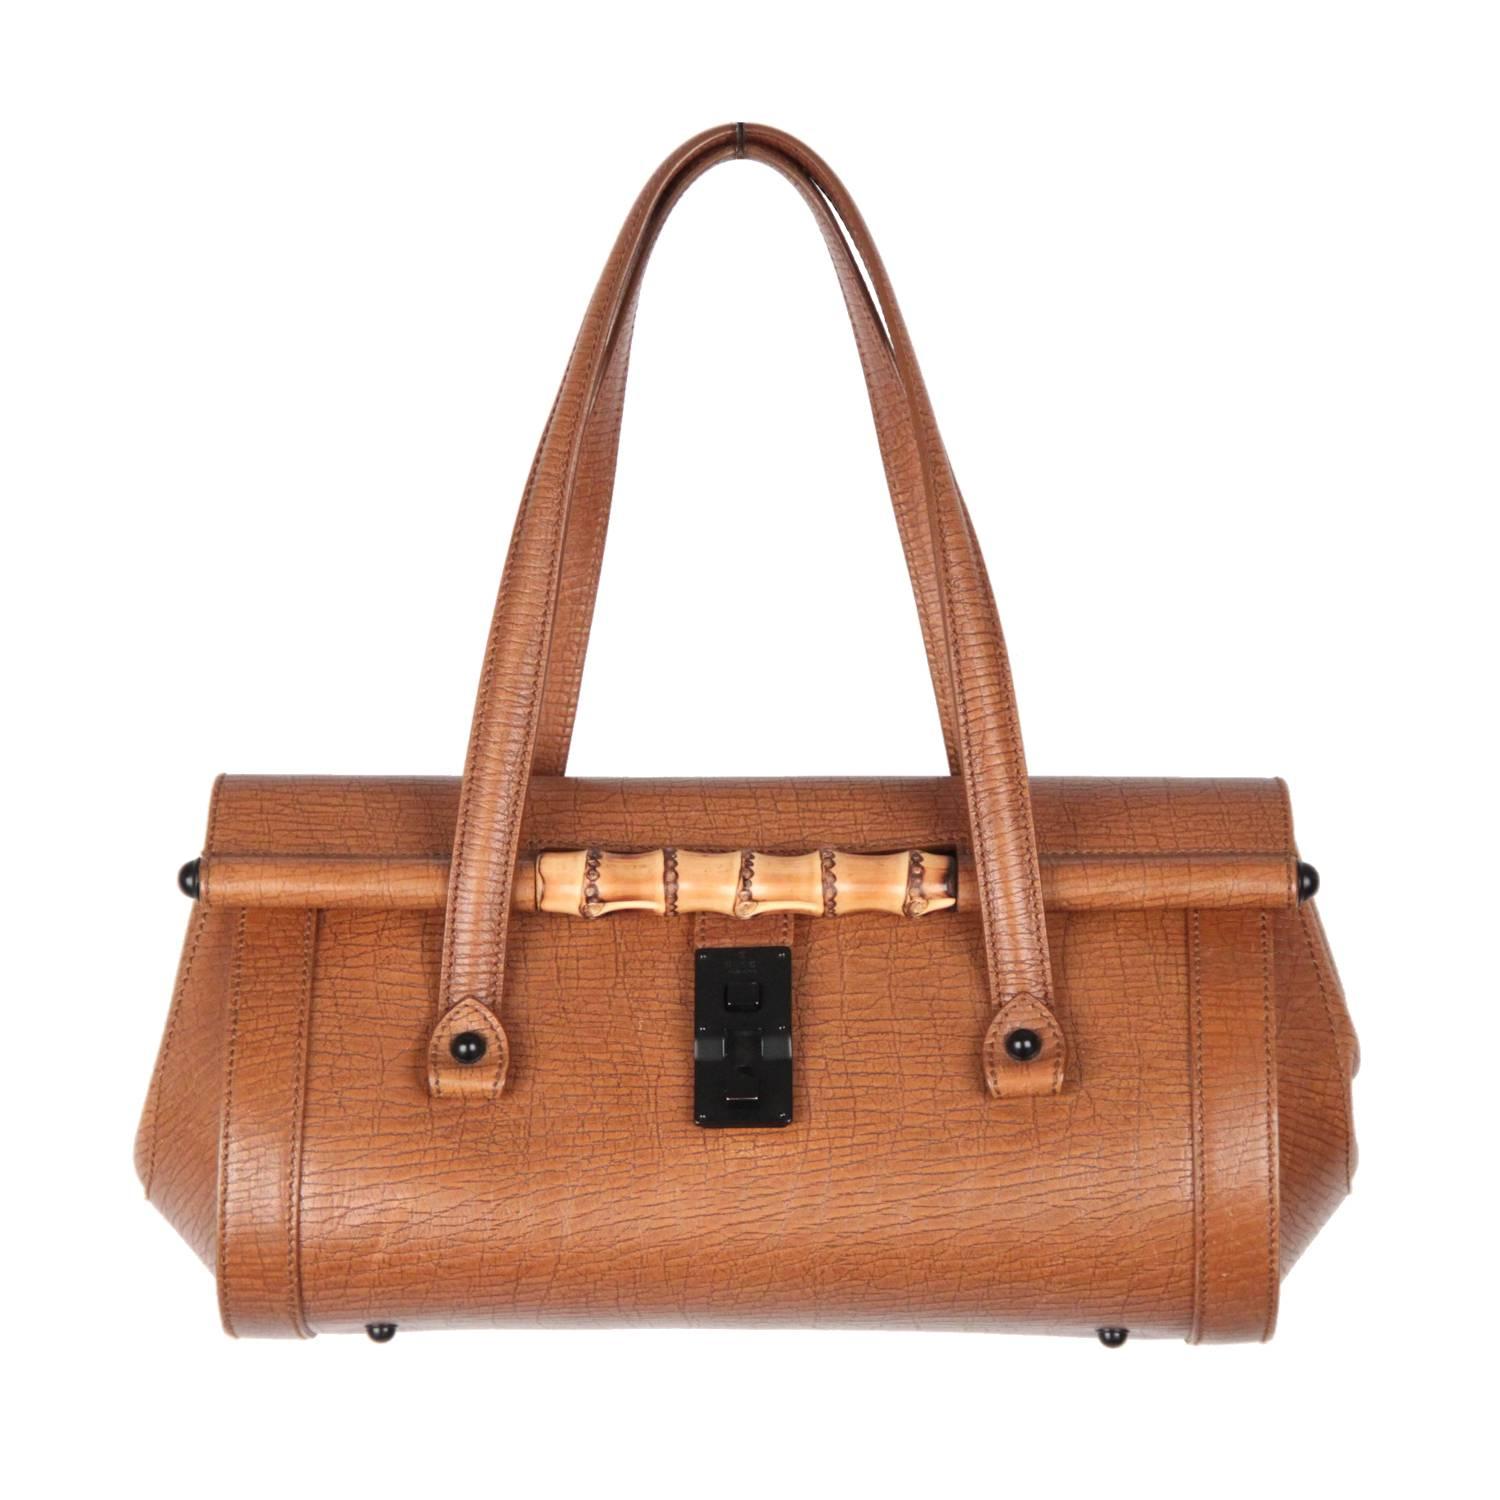 GUCCI Tan Leather BULLET BAG Handbag TOM FORD ERA Satchel w/ BAMBOO